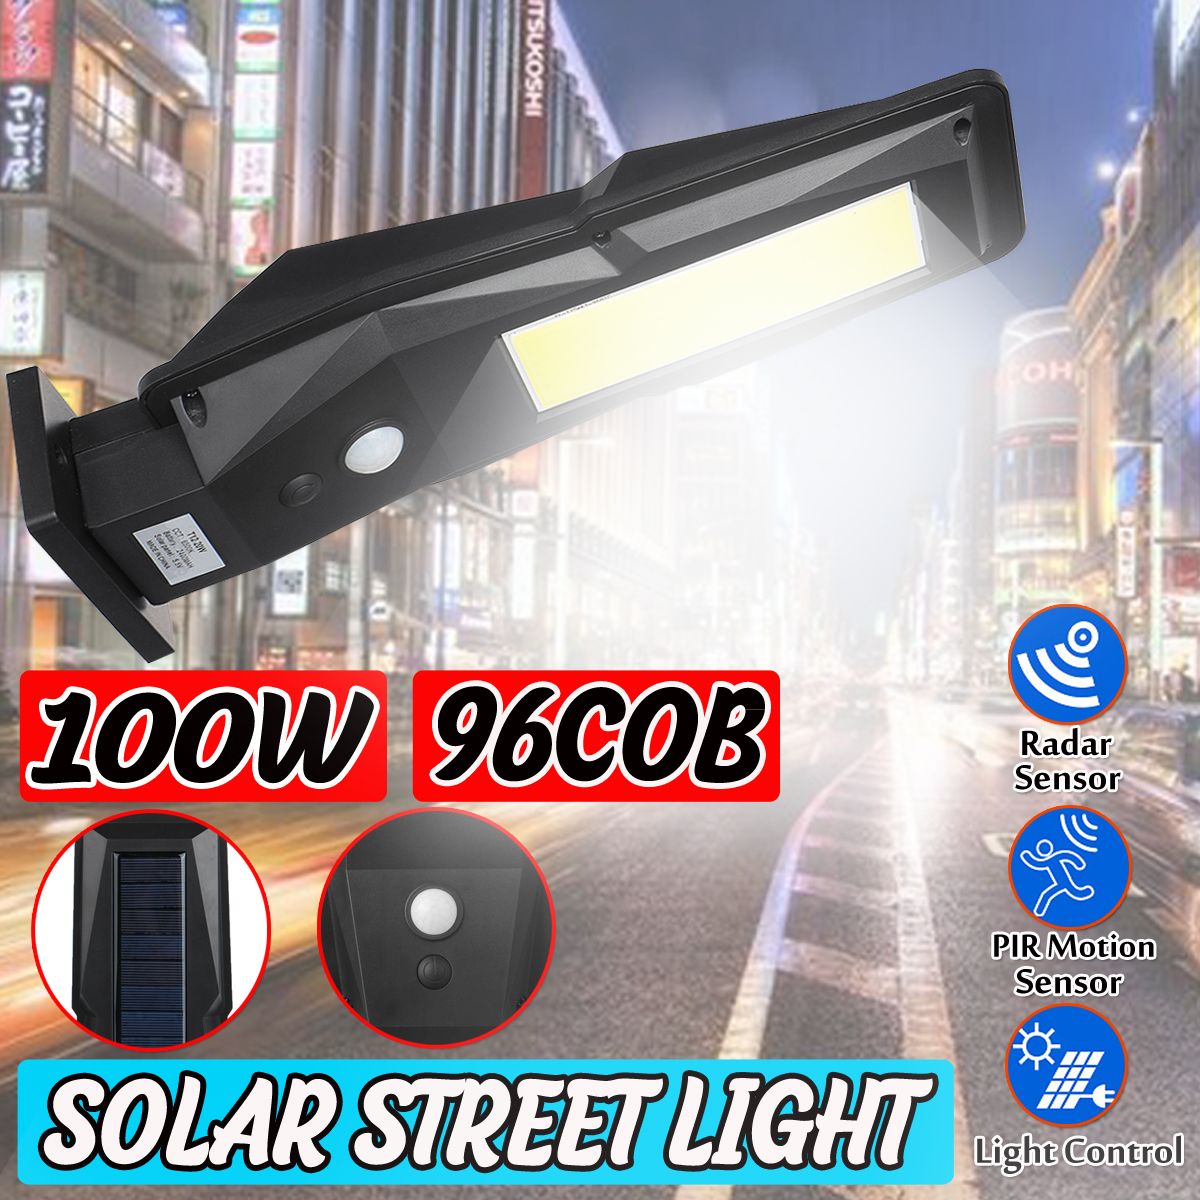 96COB-Solar-Street-Light-Radar-PIR-Motion-Sensor-Timing-Safety-Lamp-1654964